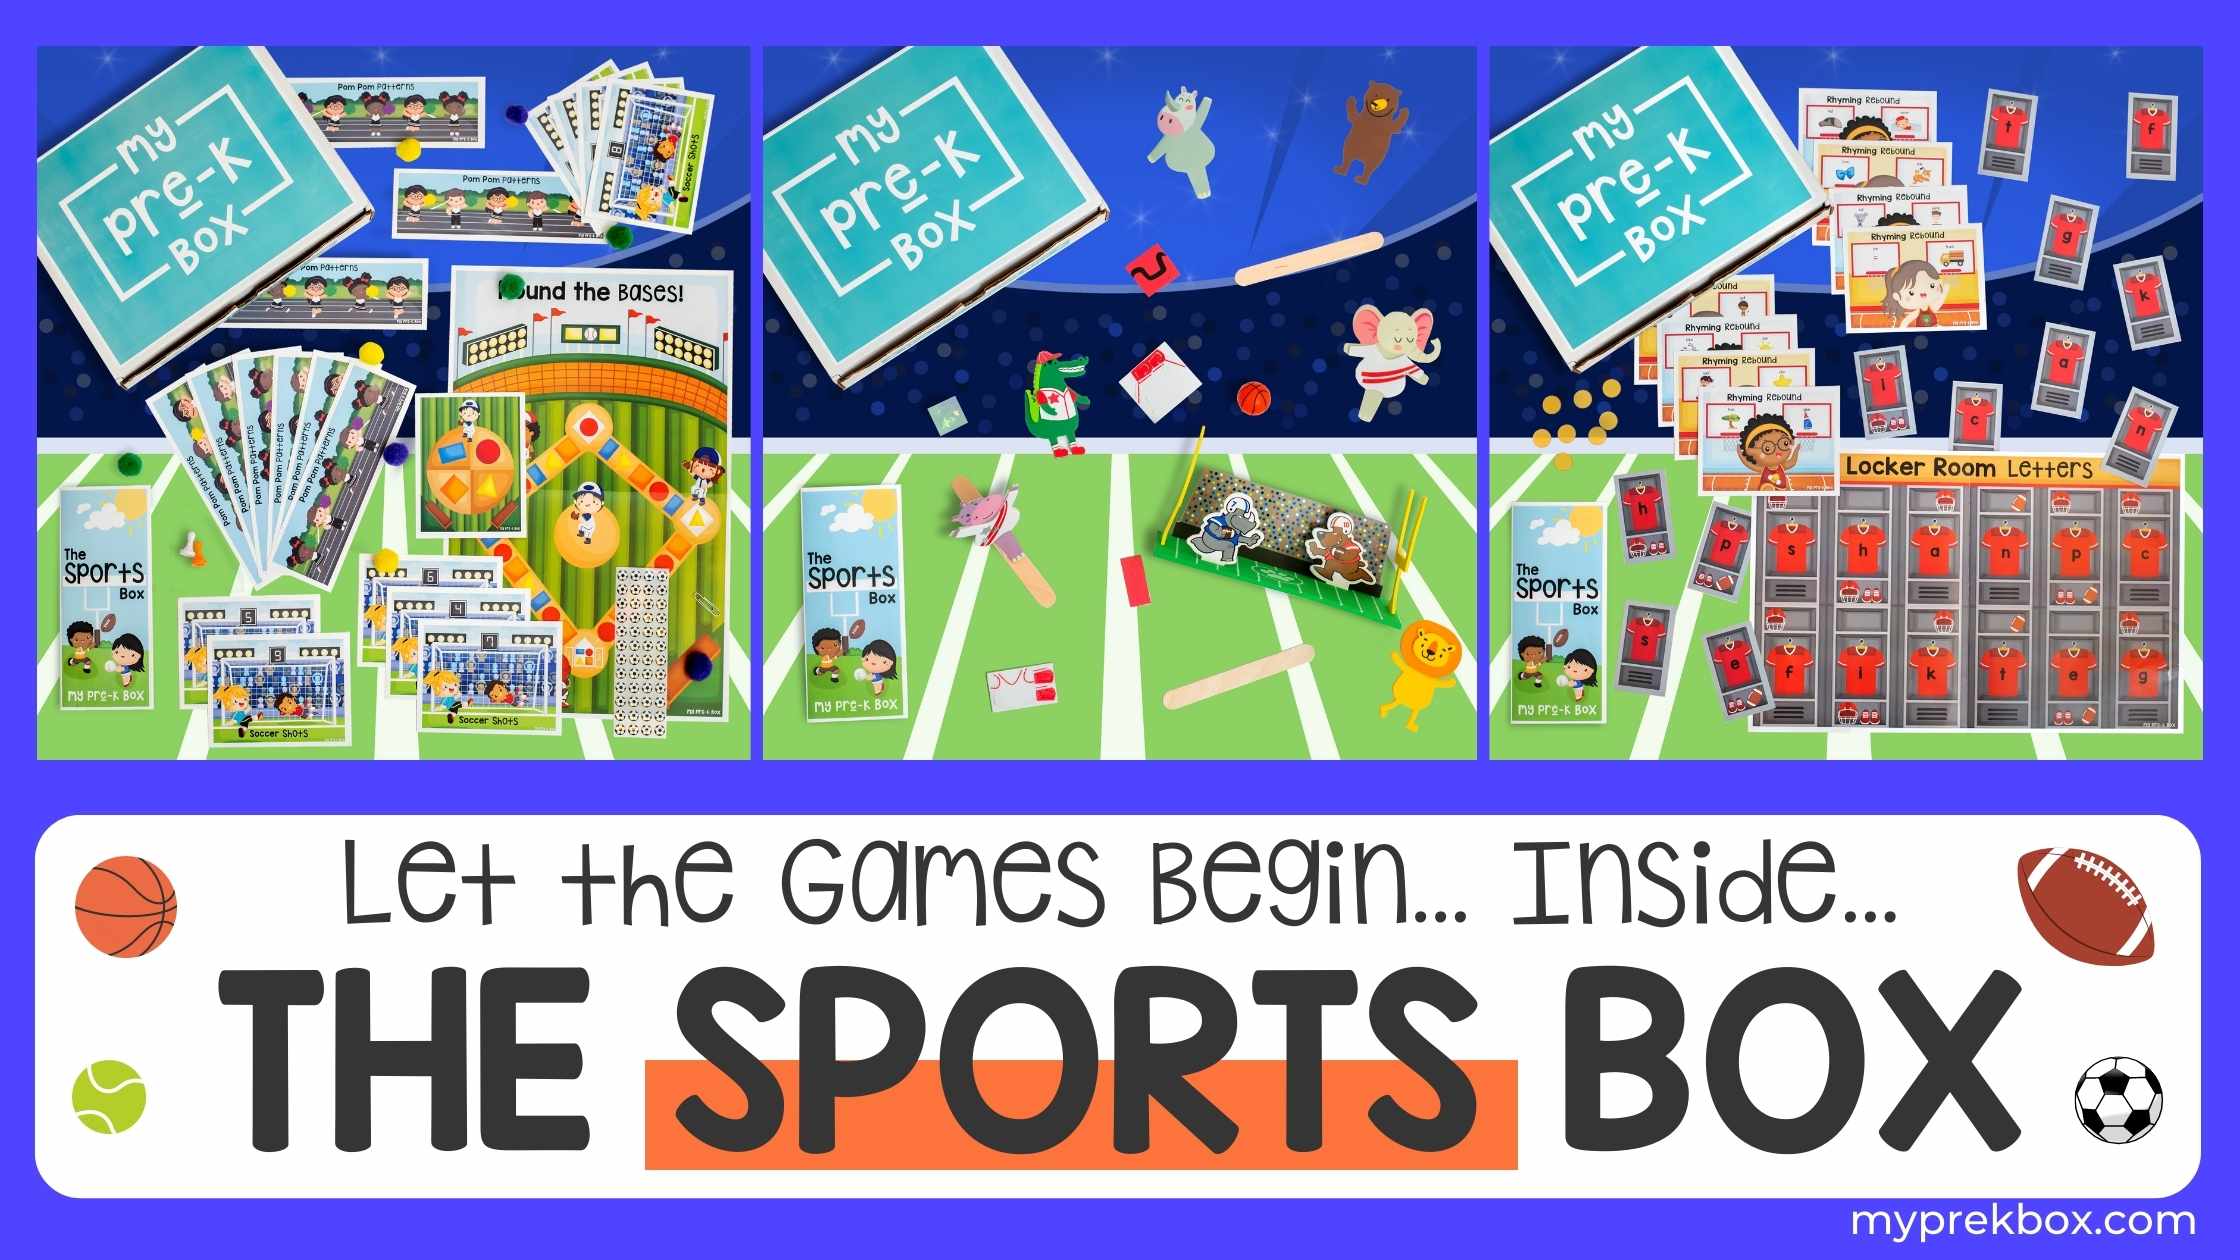 The Sports Box